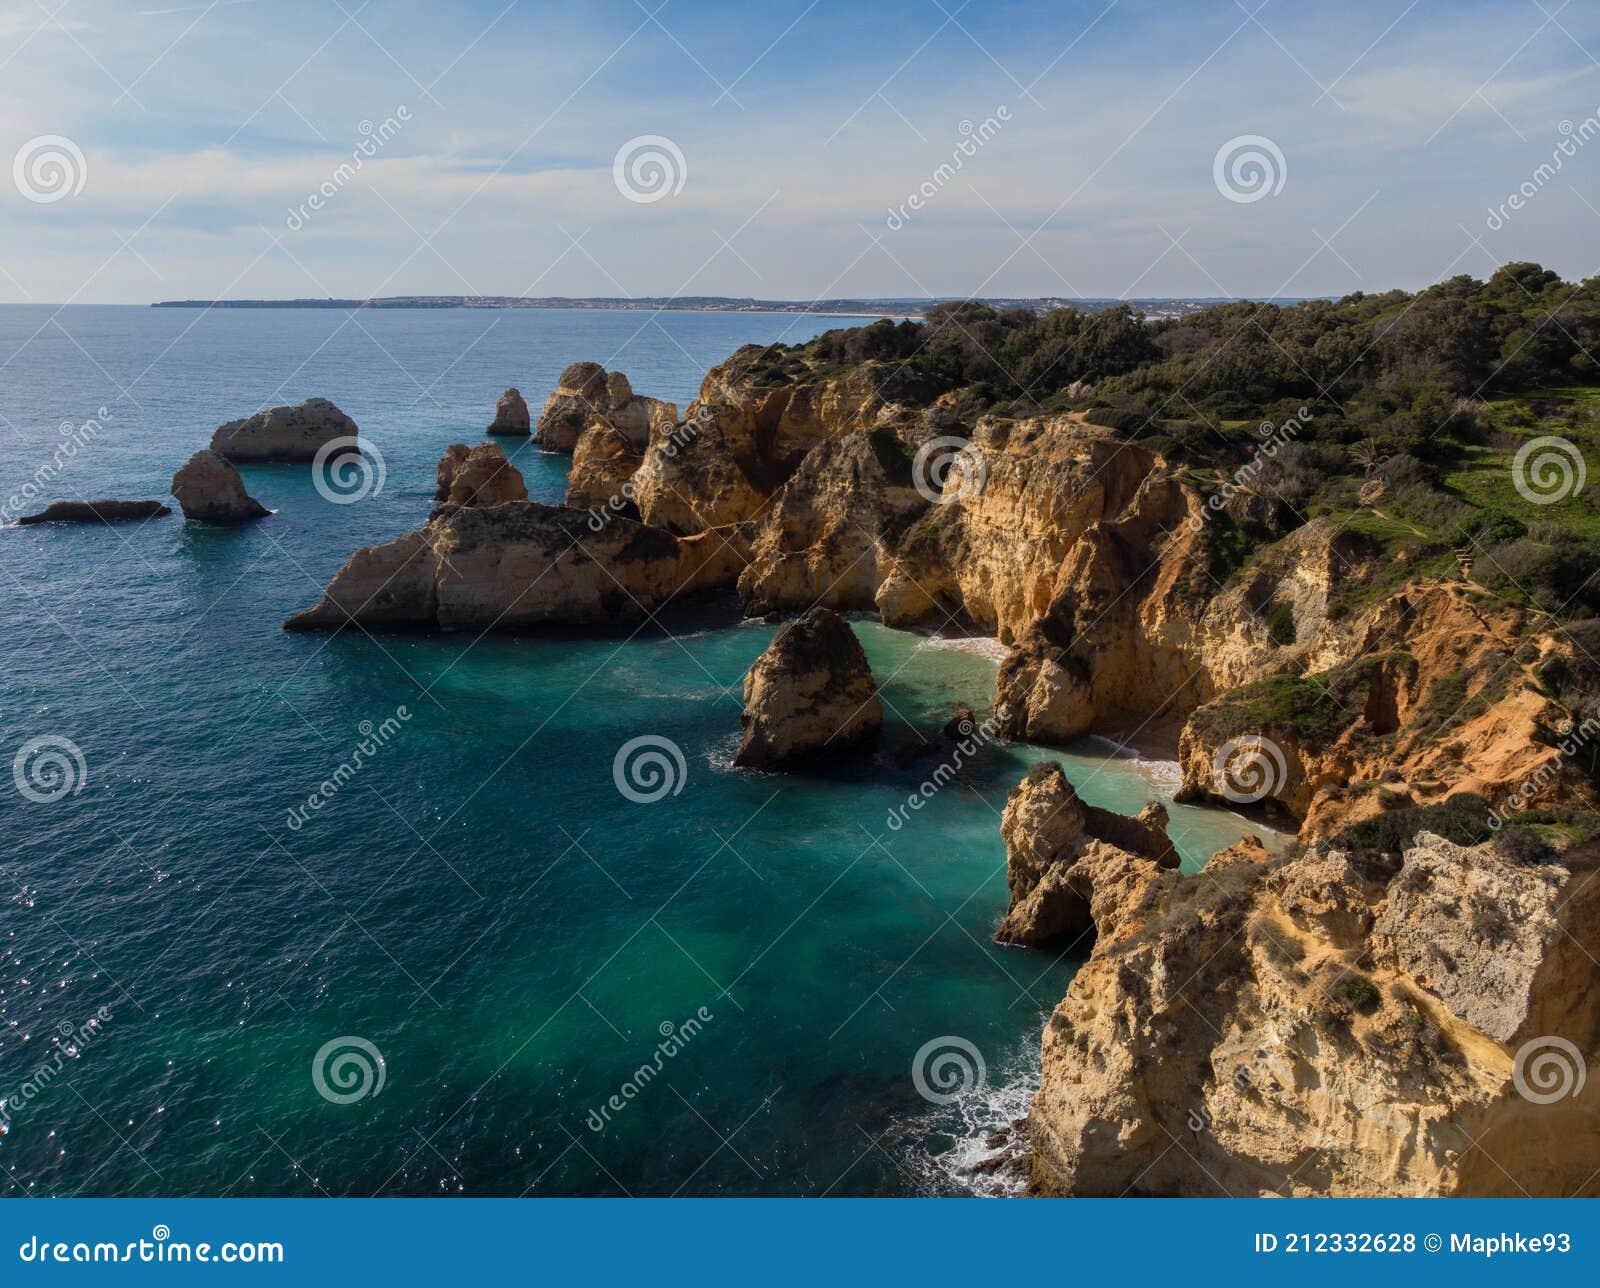 panorama view of praia do submarino algarve cliff coast sand beach holiday vacation spot in portimao portugal europe